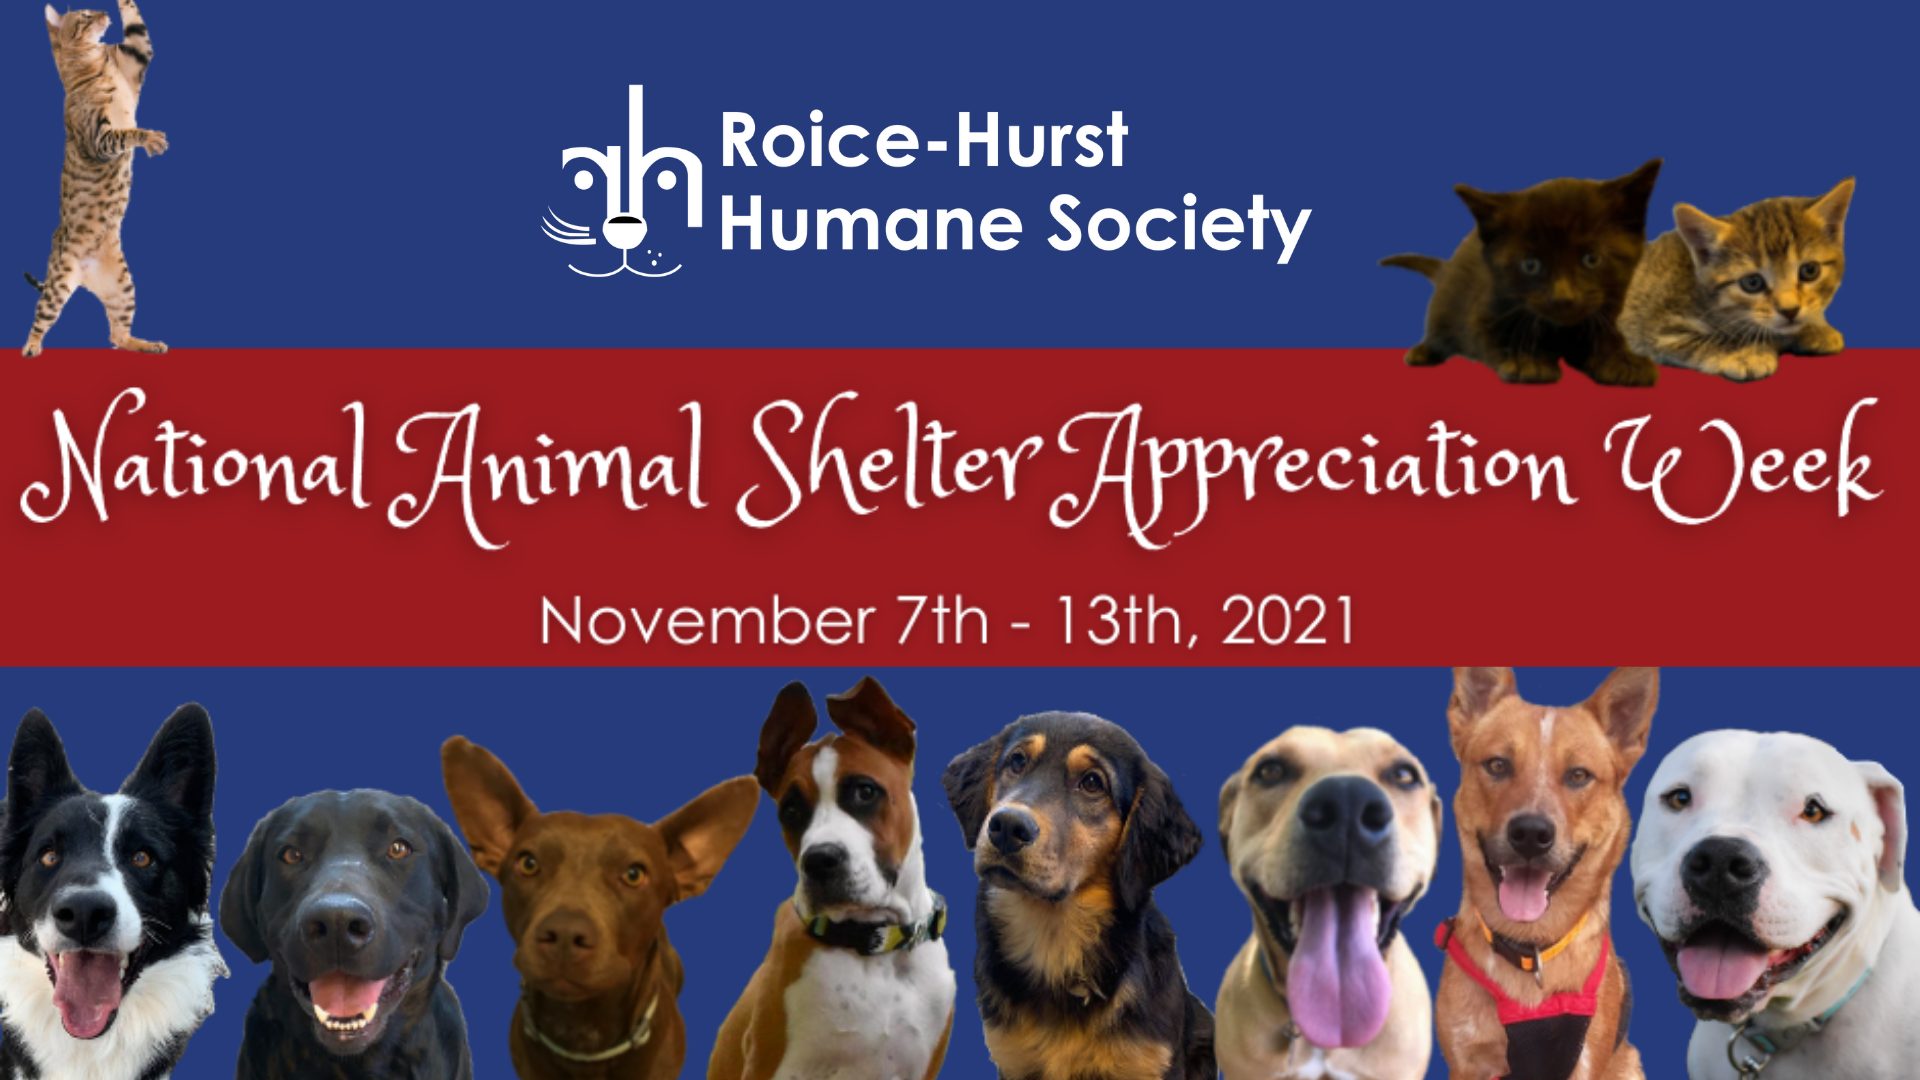 7 Ways to Celebrate National Animal Shelter Appreciation Week!